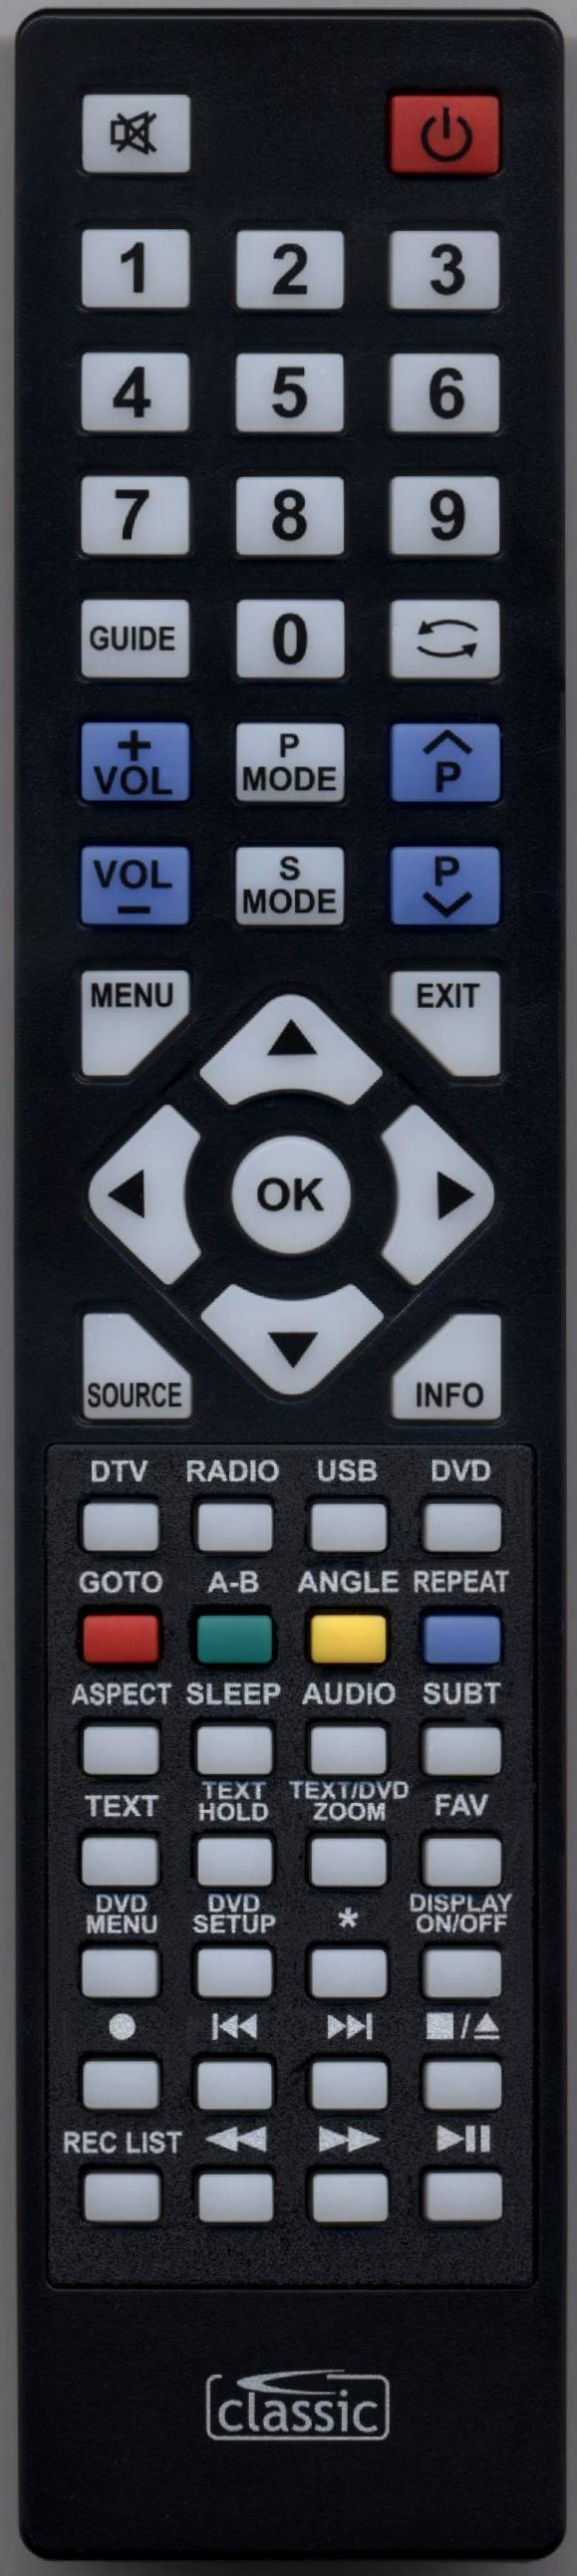 Blaupunkt B32A148TCHD Remote Control